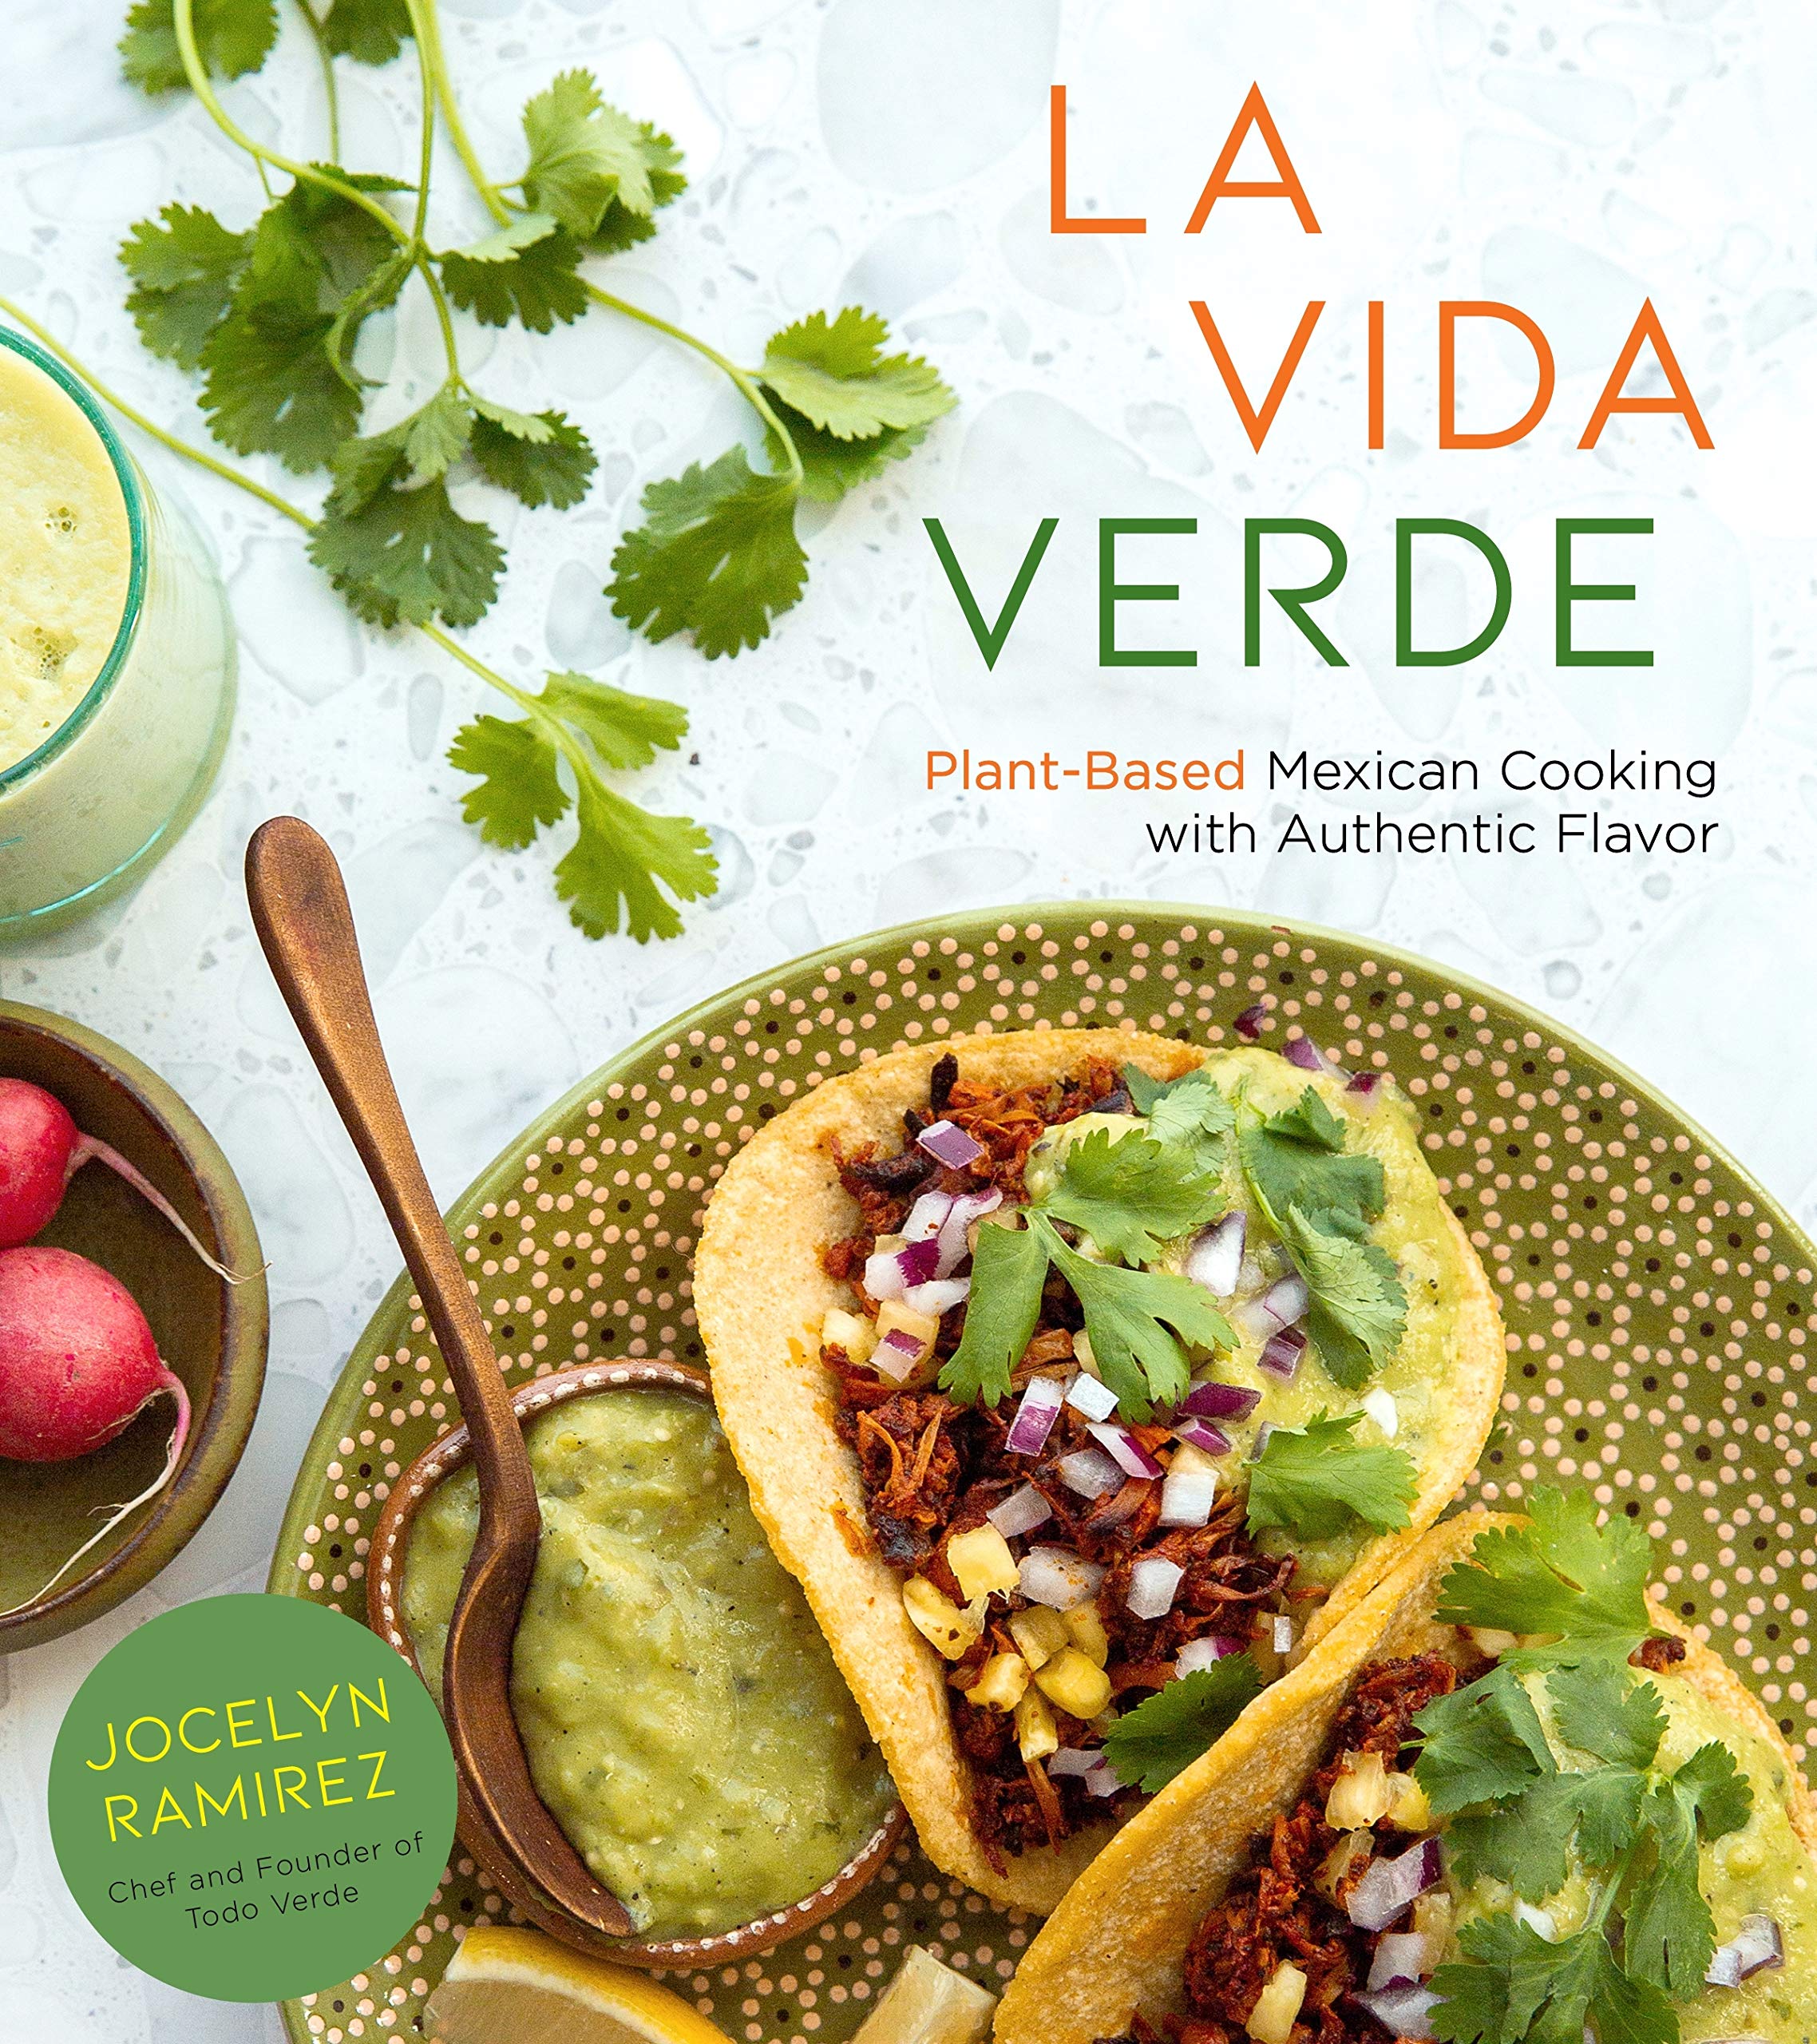 La Vida Verde: Plant-Based Mexican Cooking with Authentic Flavor (Jocelyn Ramirez)